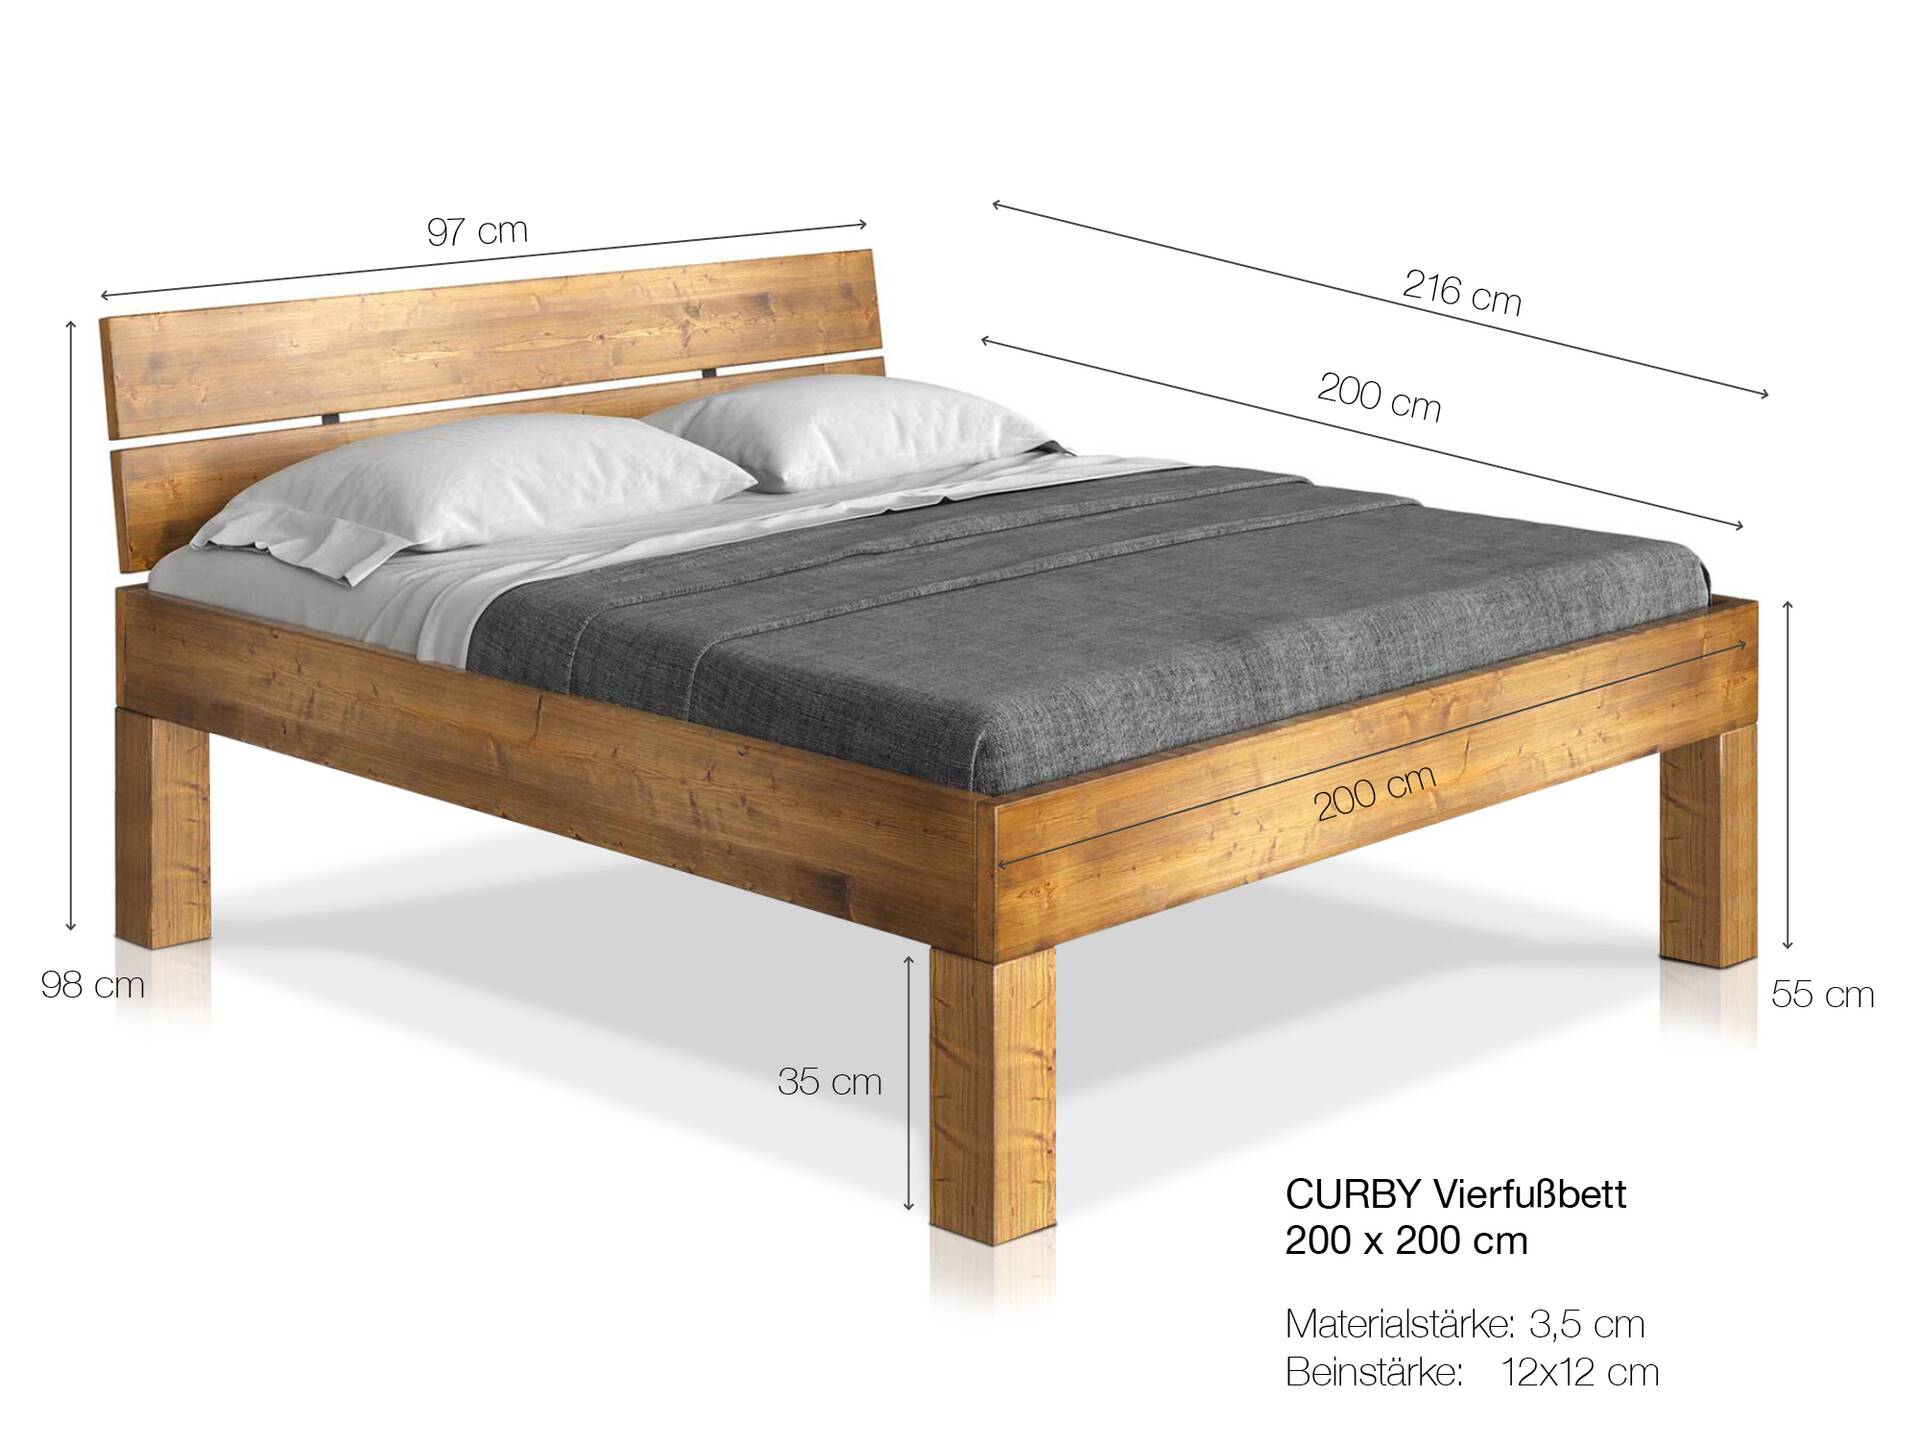 CURBY 4-Fuß-Bett mit Kopfteil, Material Massivholz, rustikale Altholzoptik, Fichte 200 x 200 cm | natur | Komforthöhe